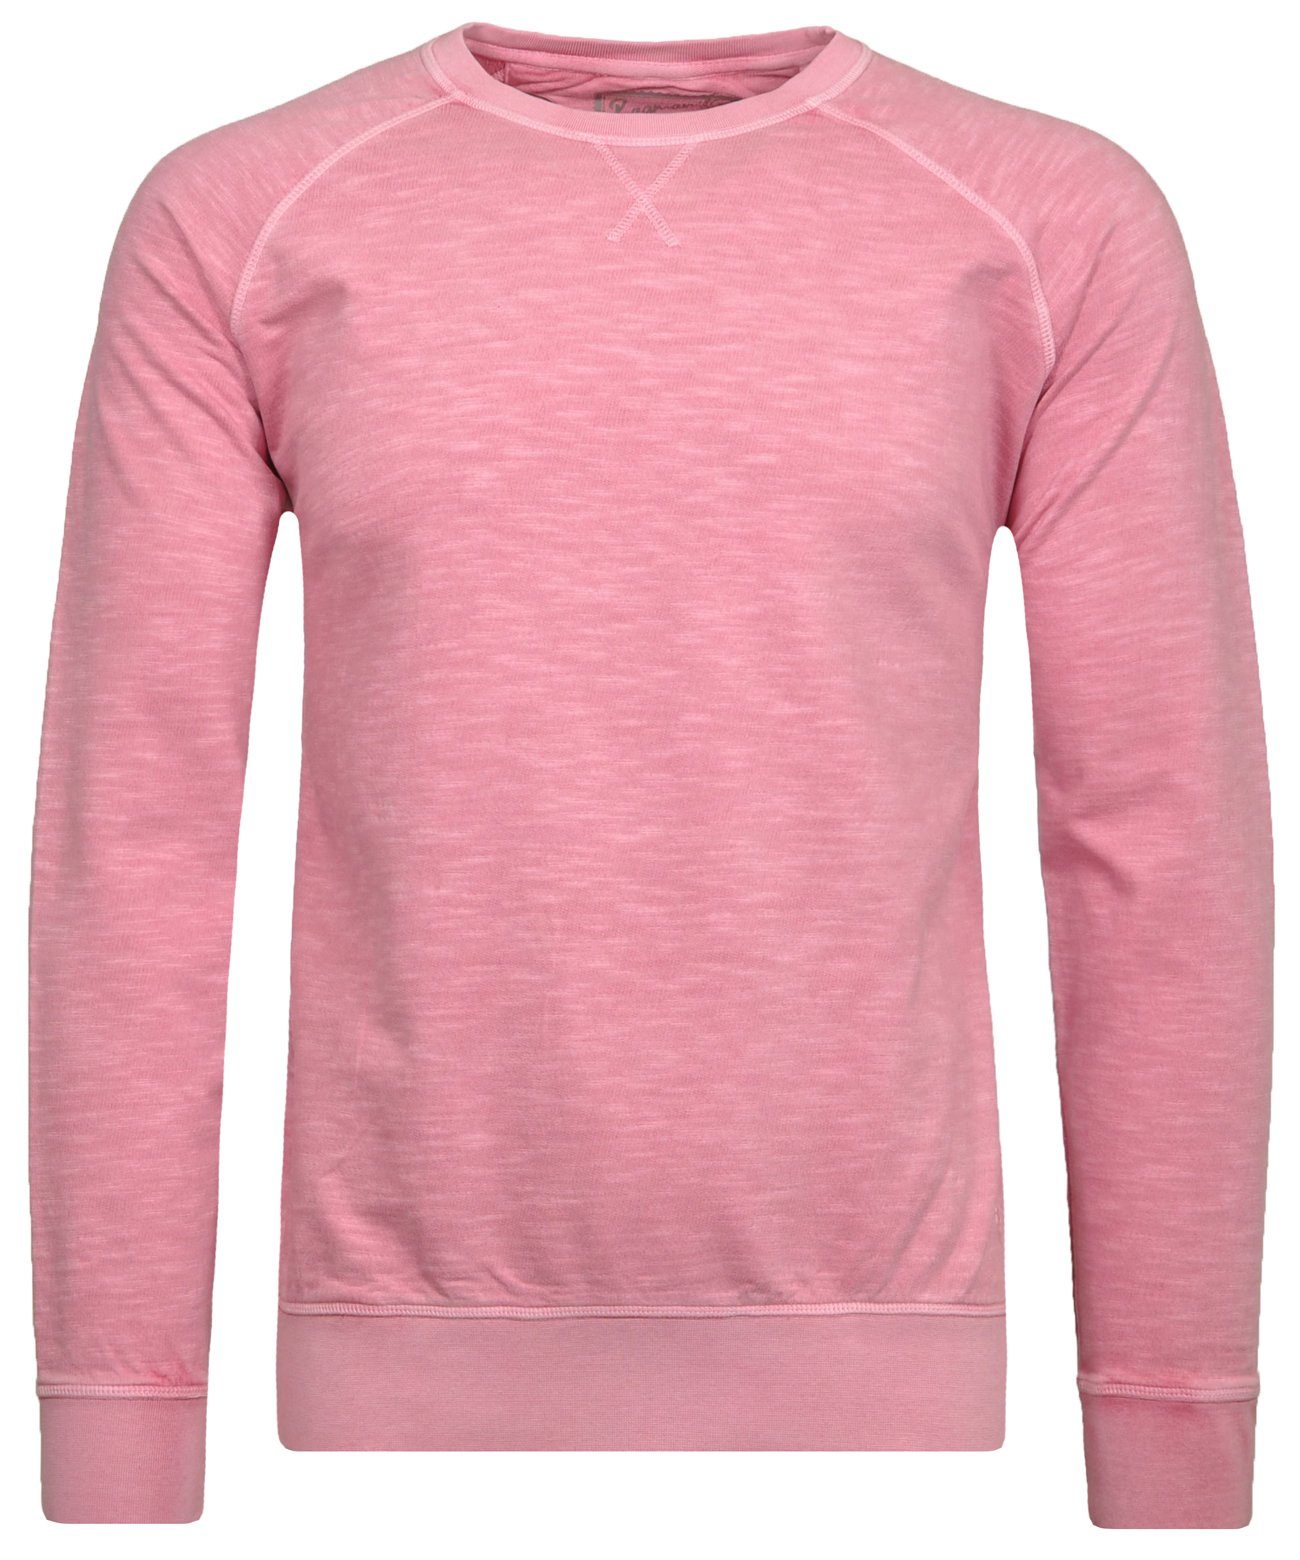 RAGMAN Pink-641 Sweatshirt